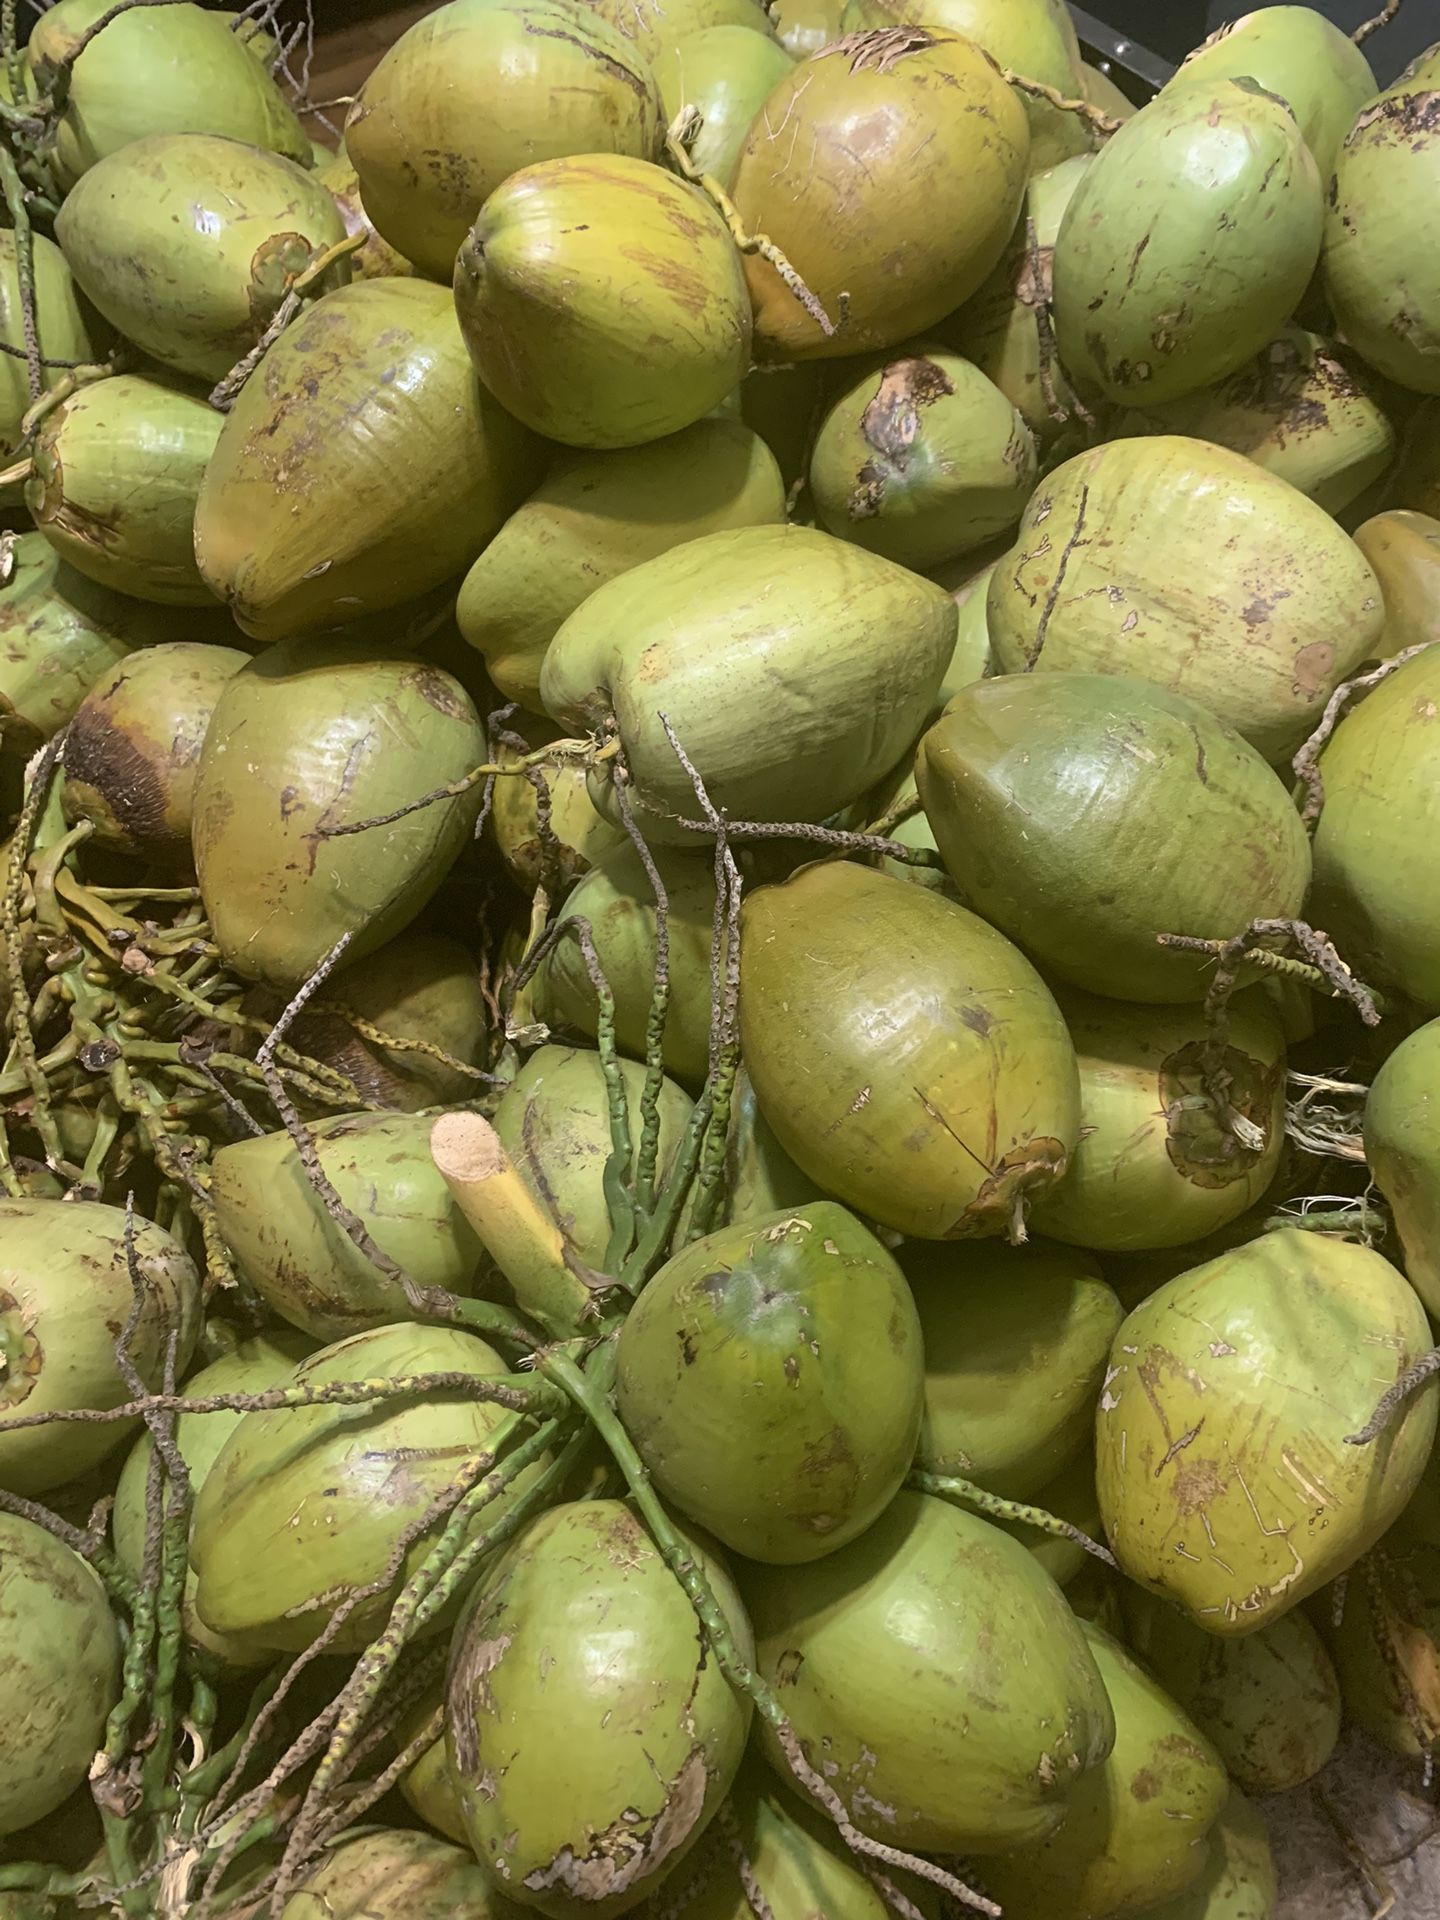 Fresh Coconut 